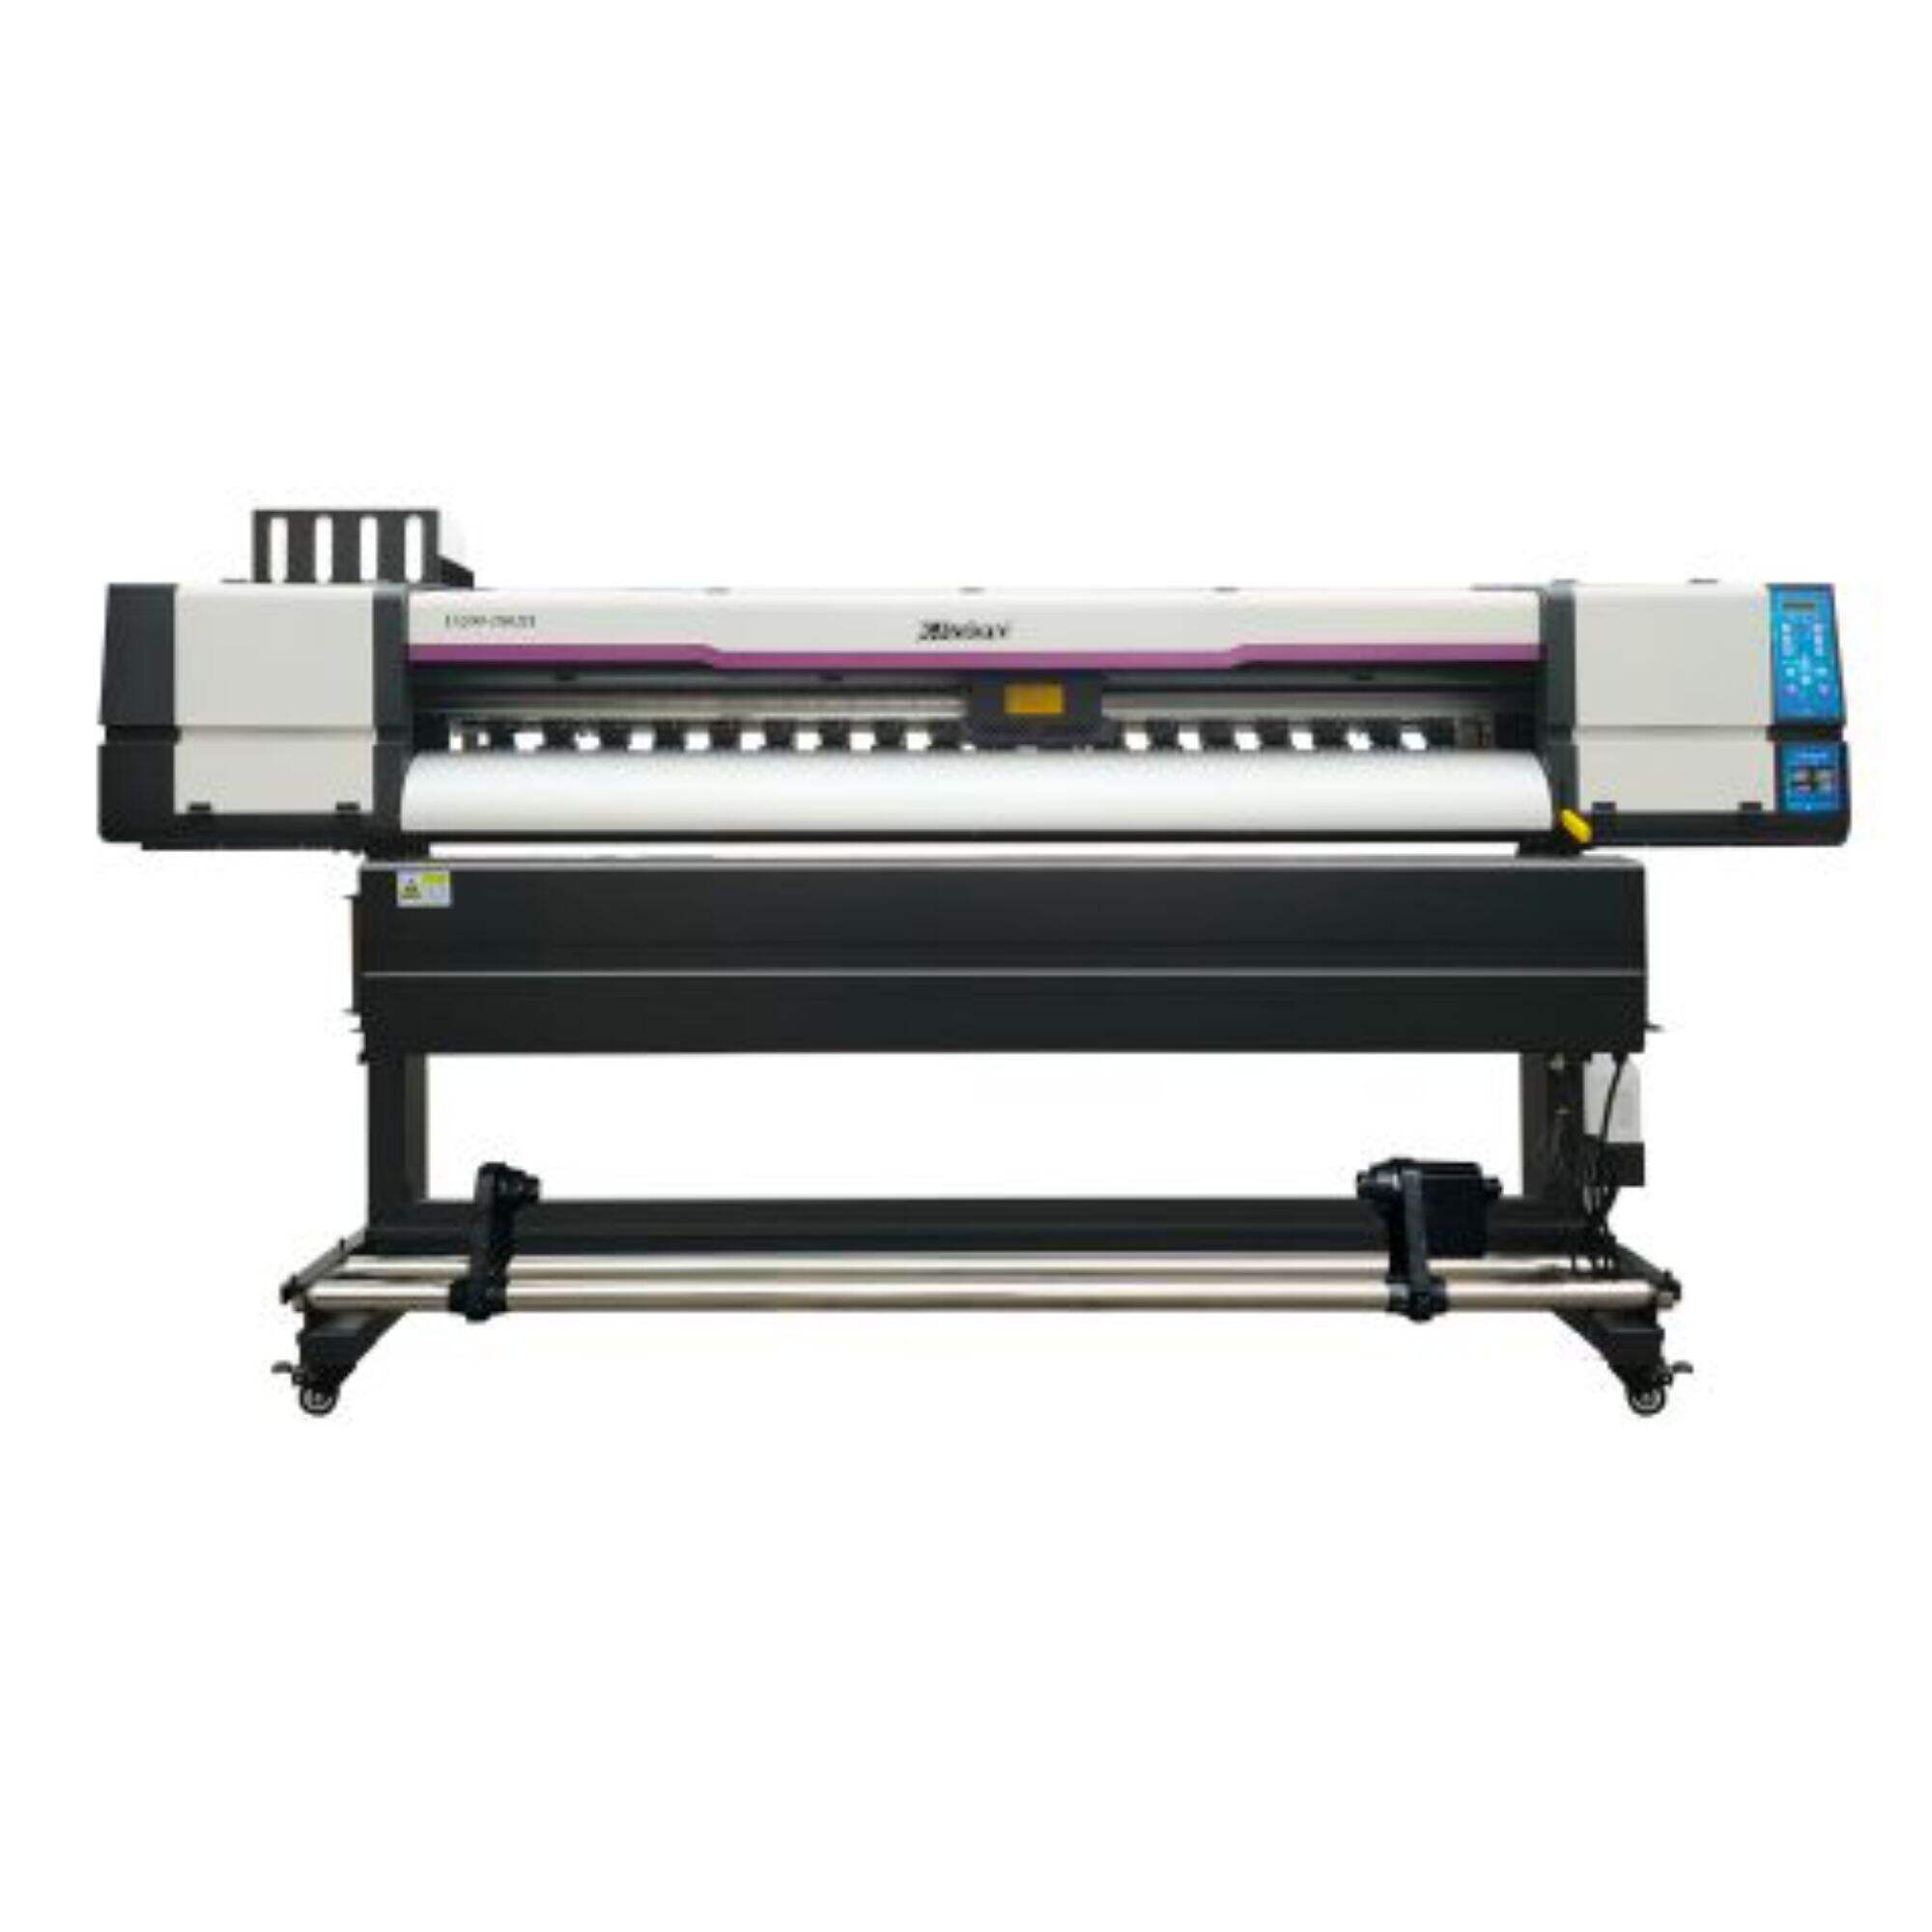 XL-1802H I3200 इनडोर/आउटडोर प्रिंटर